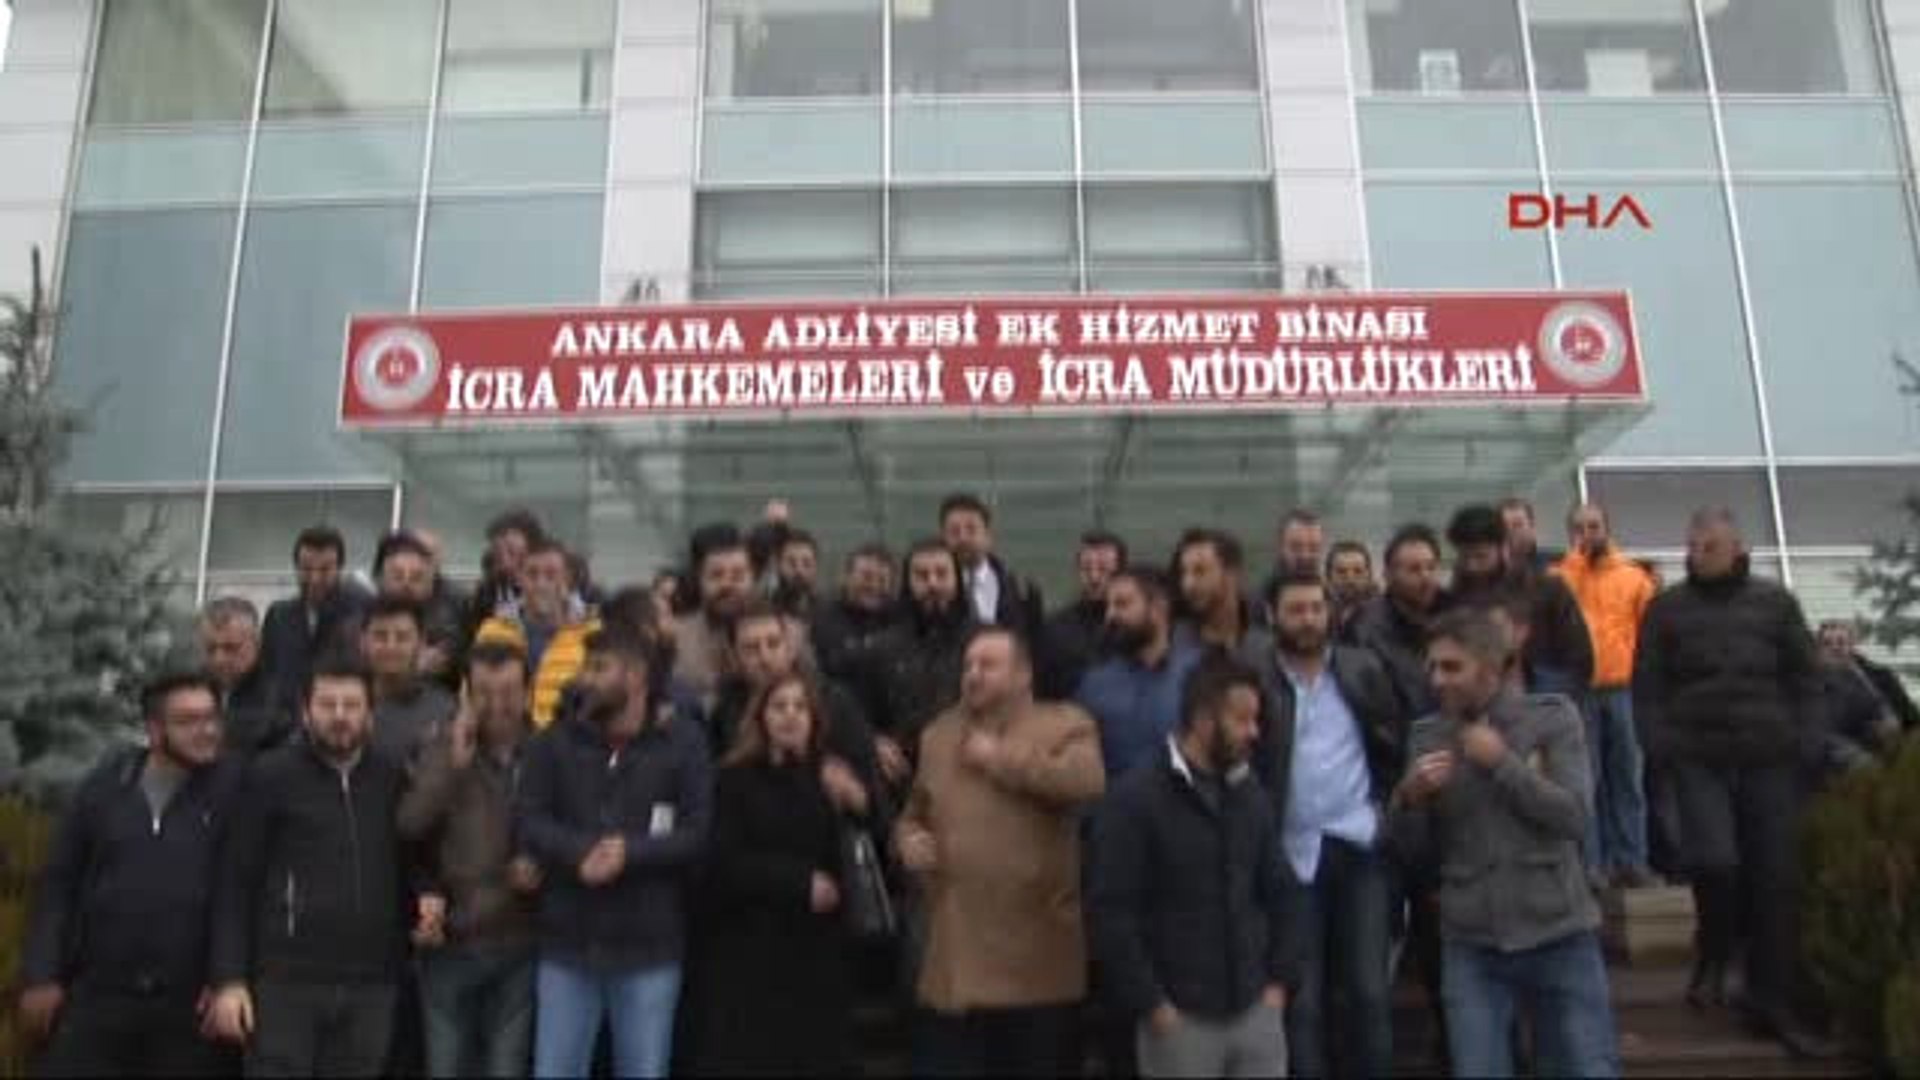 icra dairesine alinmayan avukat katipleri protesto gosteri yapti dailymotion video